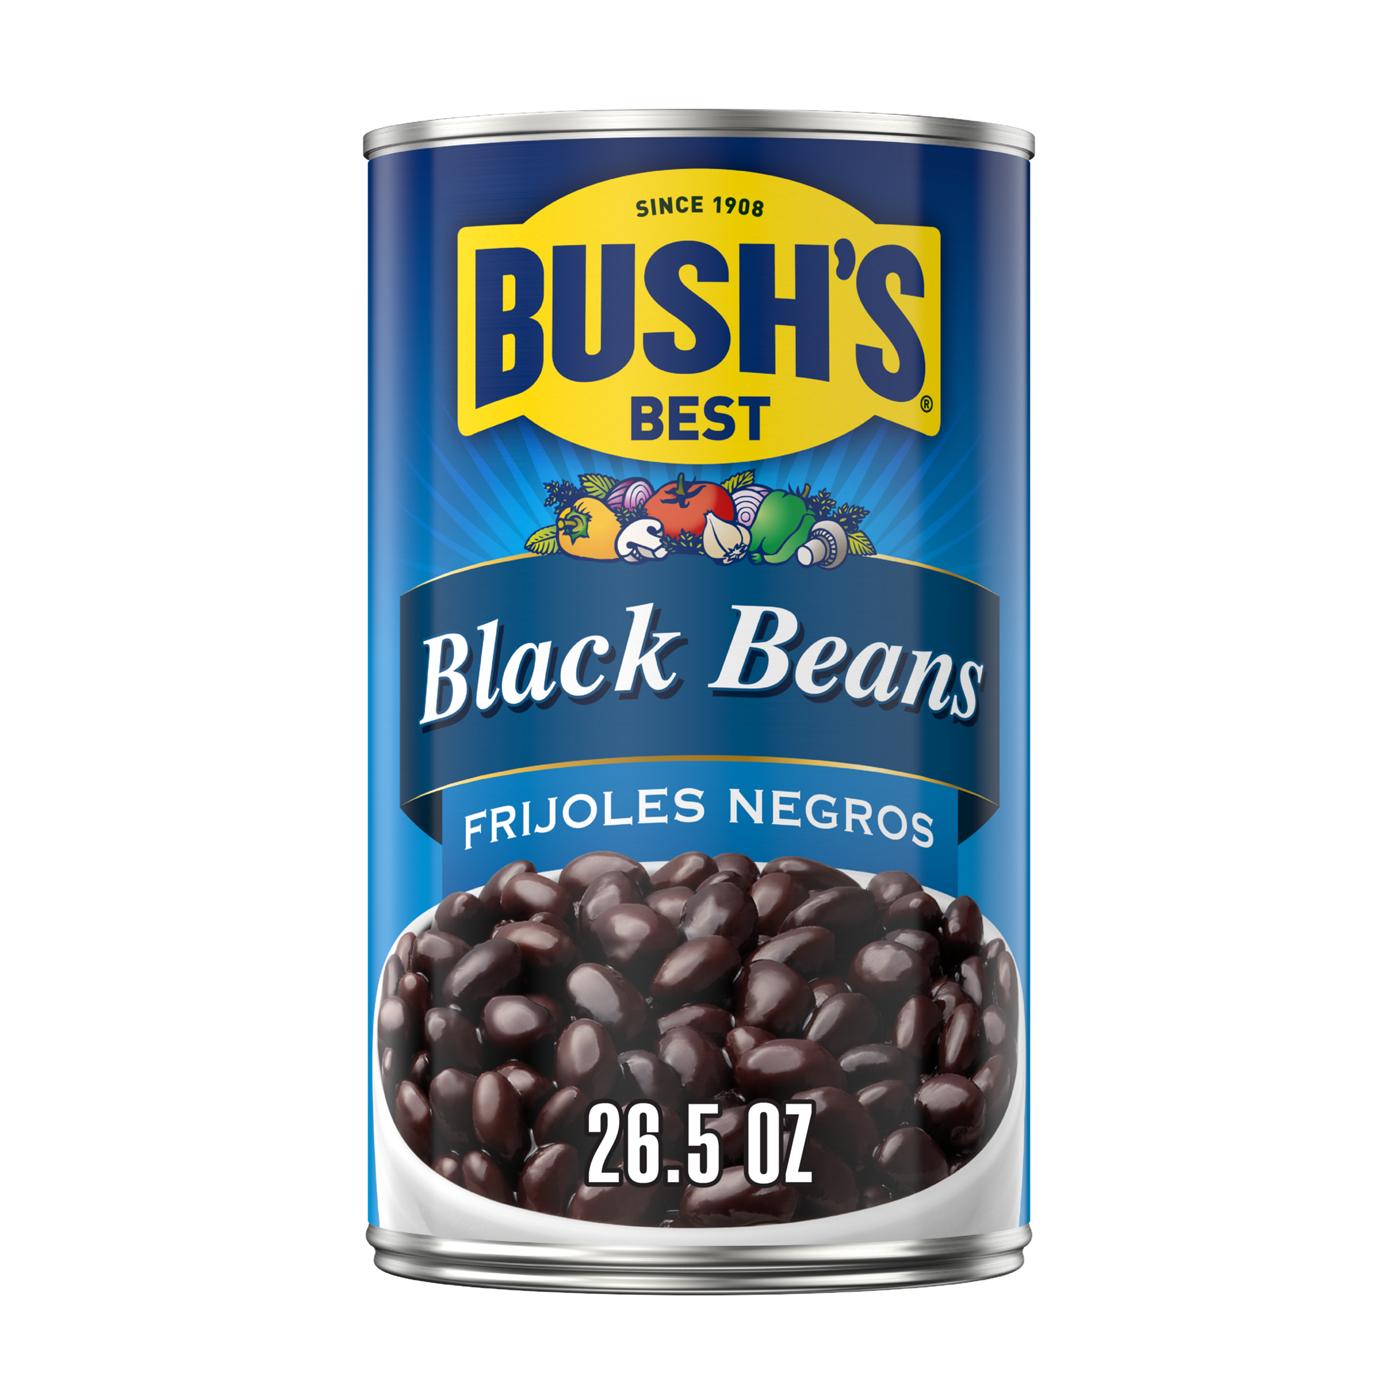 Bush's Best Black Beans; image 1 of 4